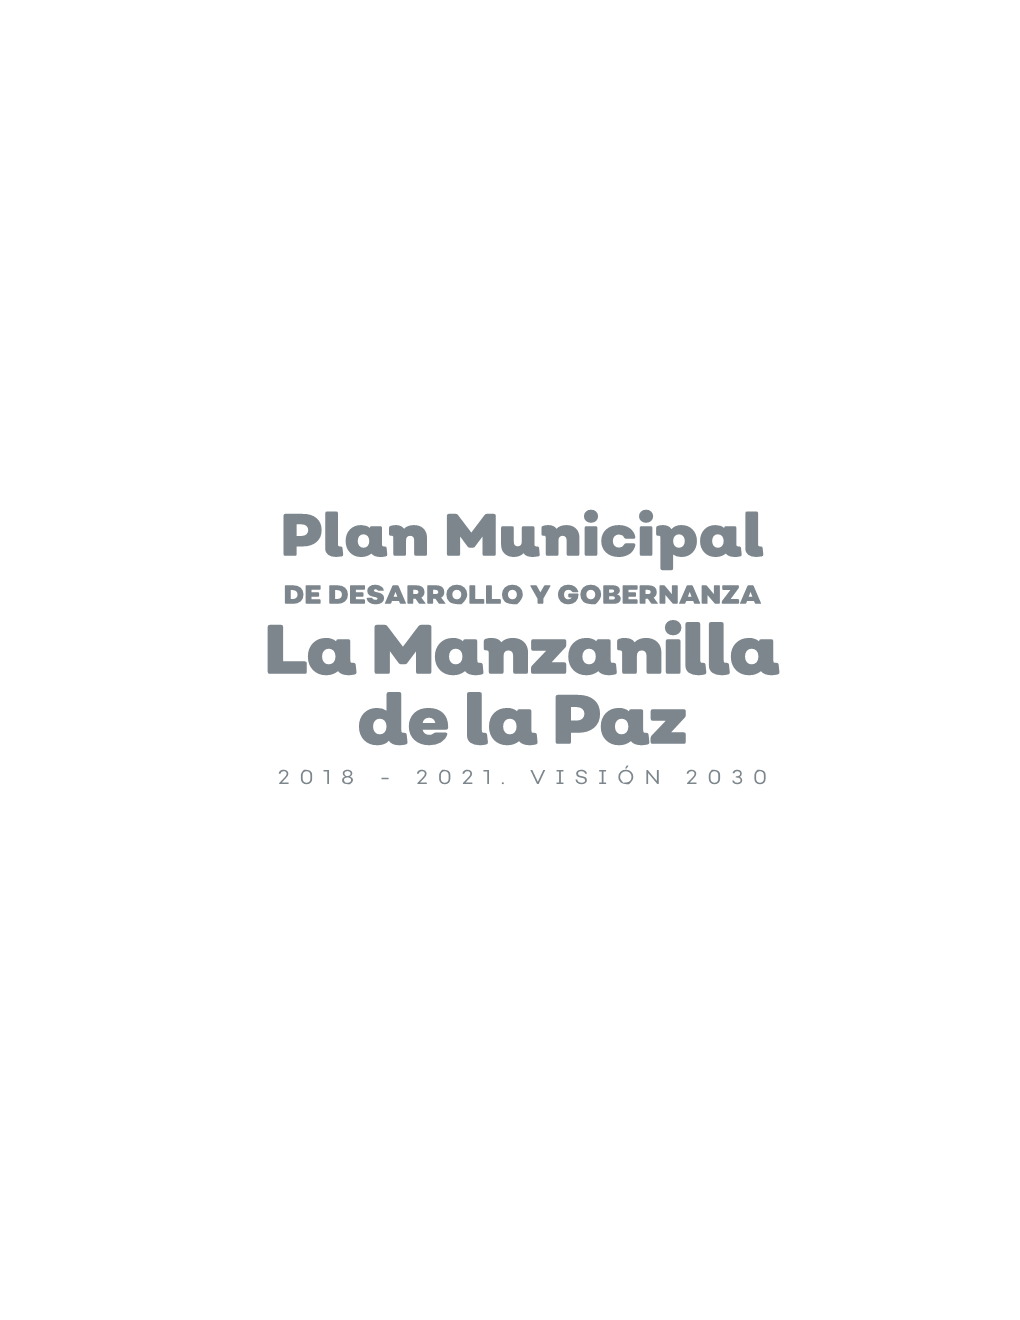 La Manzanilla De La Paz 2018 - 2021